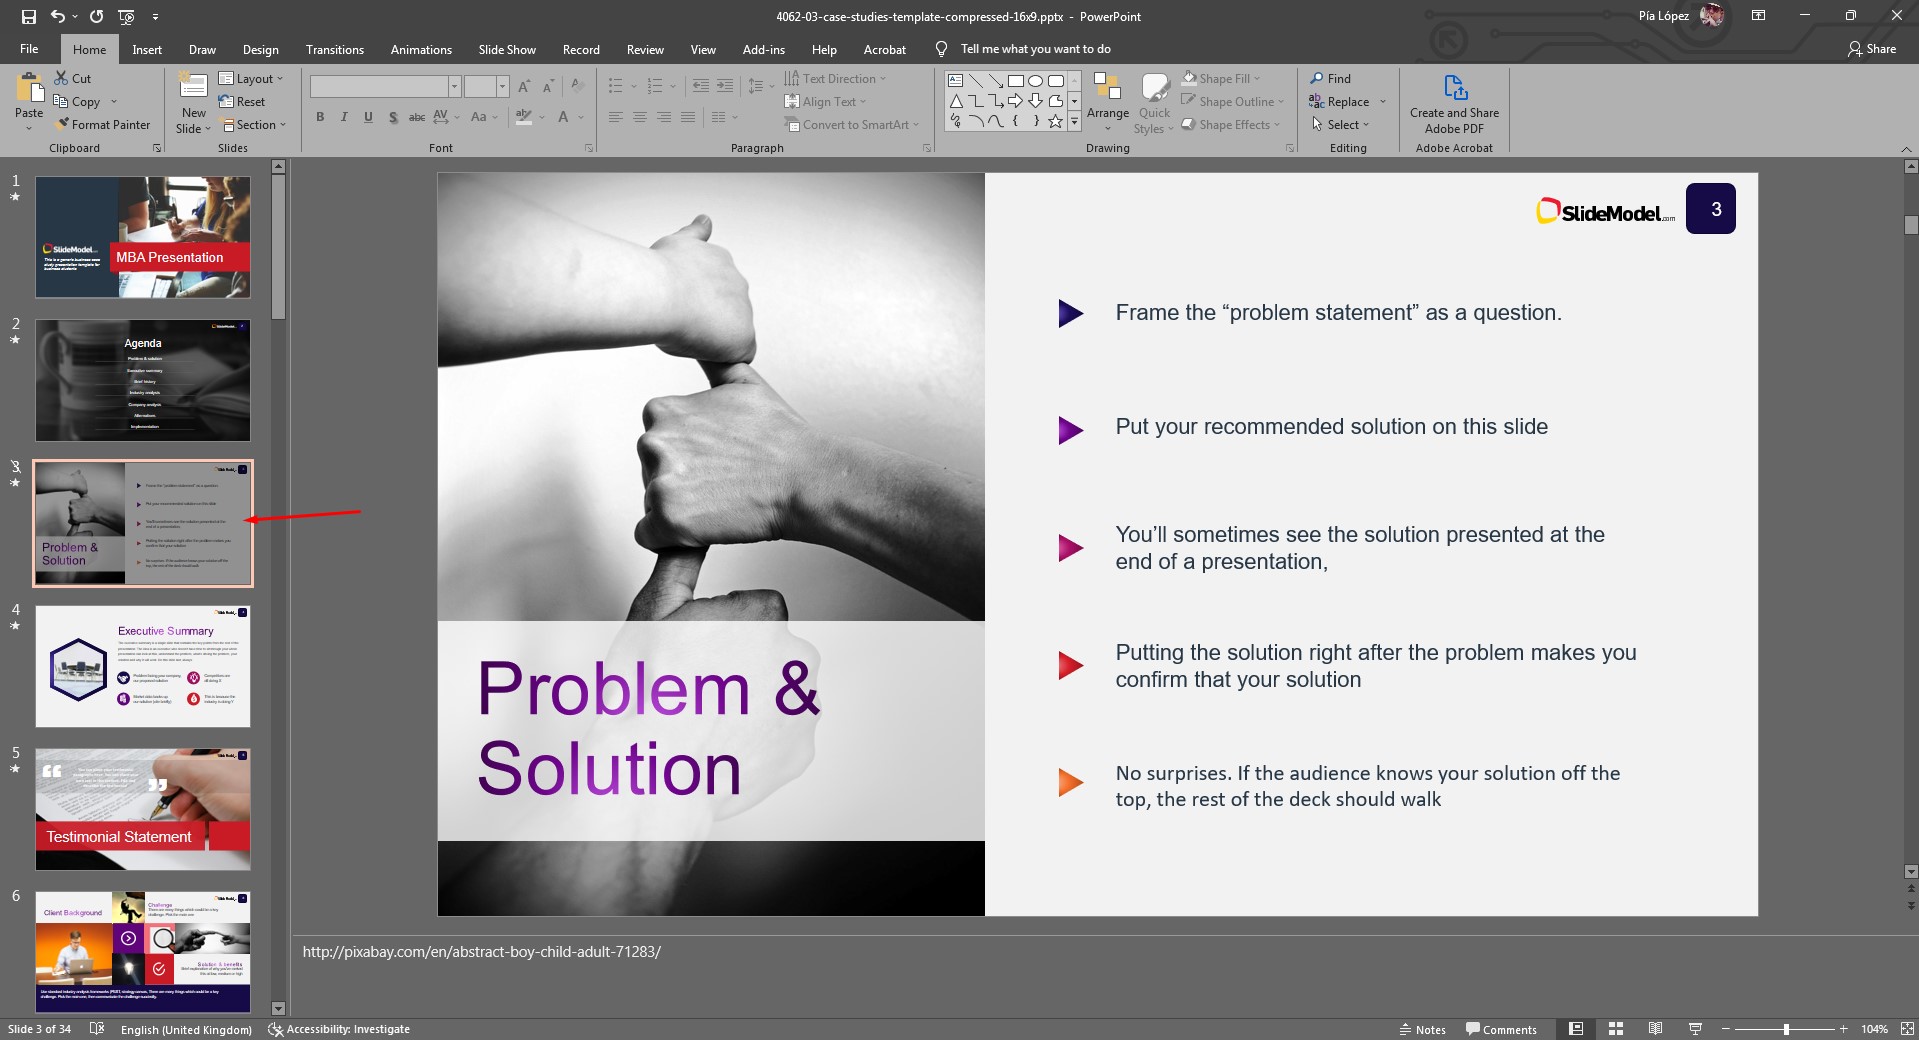 appearance of a hidden slide in PowerPoint